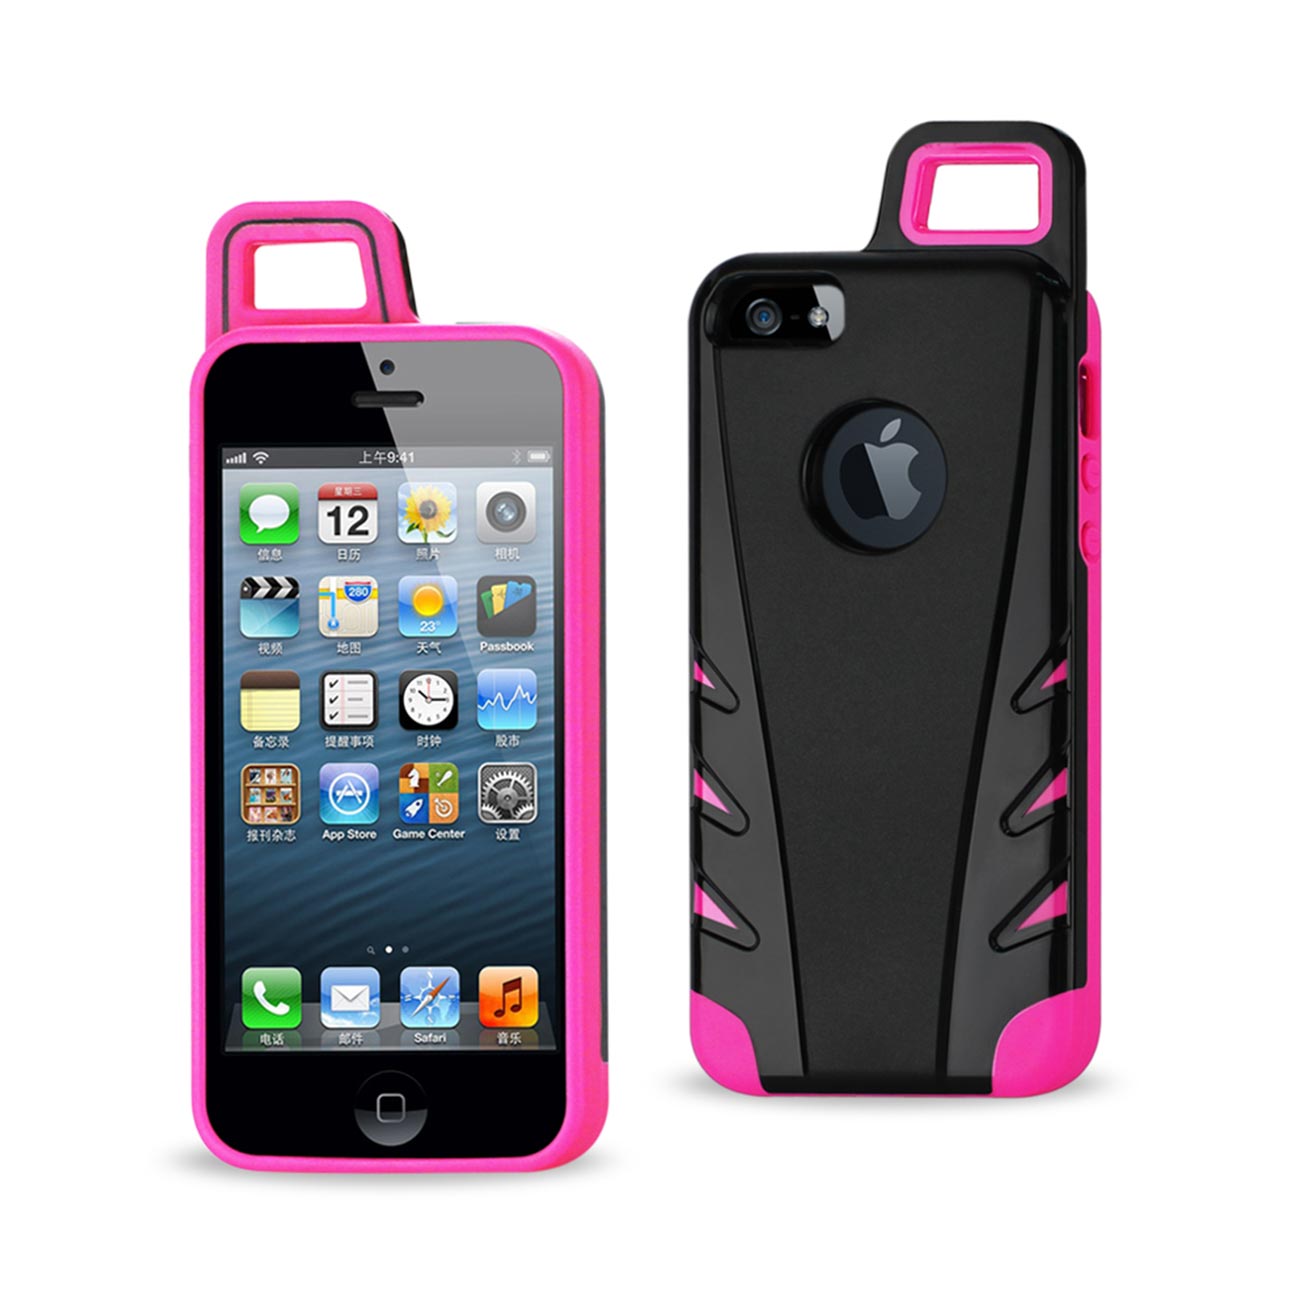 Case Hybrid iPhone 5/ 5S/ SE Drop Proof Workout With Hook Black Hot Pink Color